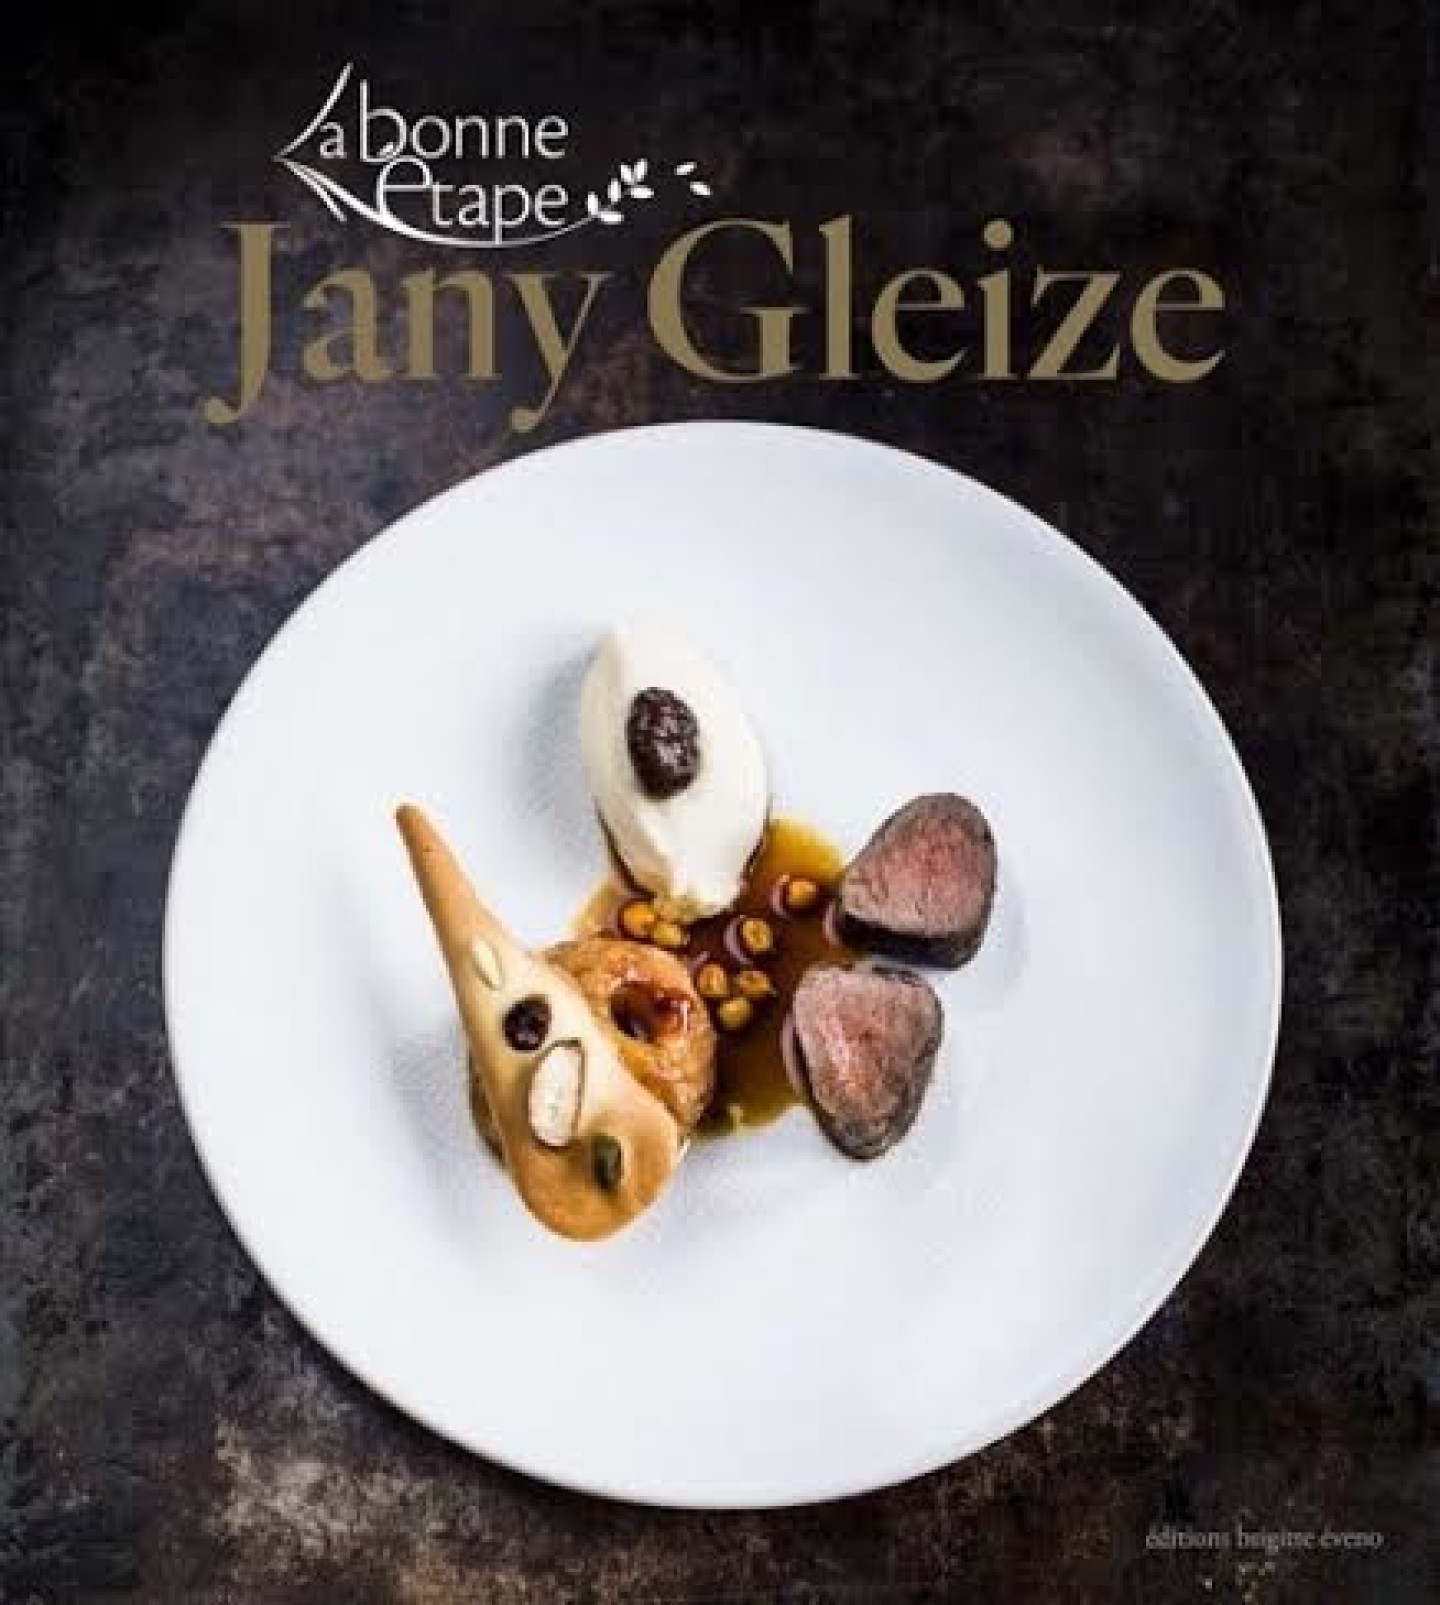 La Bonne Etape de Jany Gleize